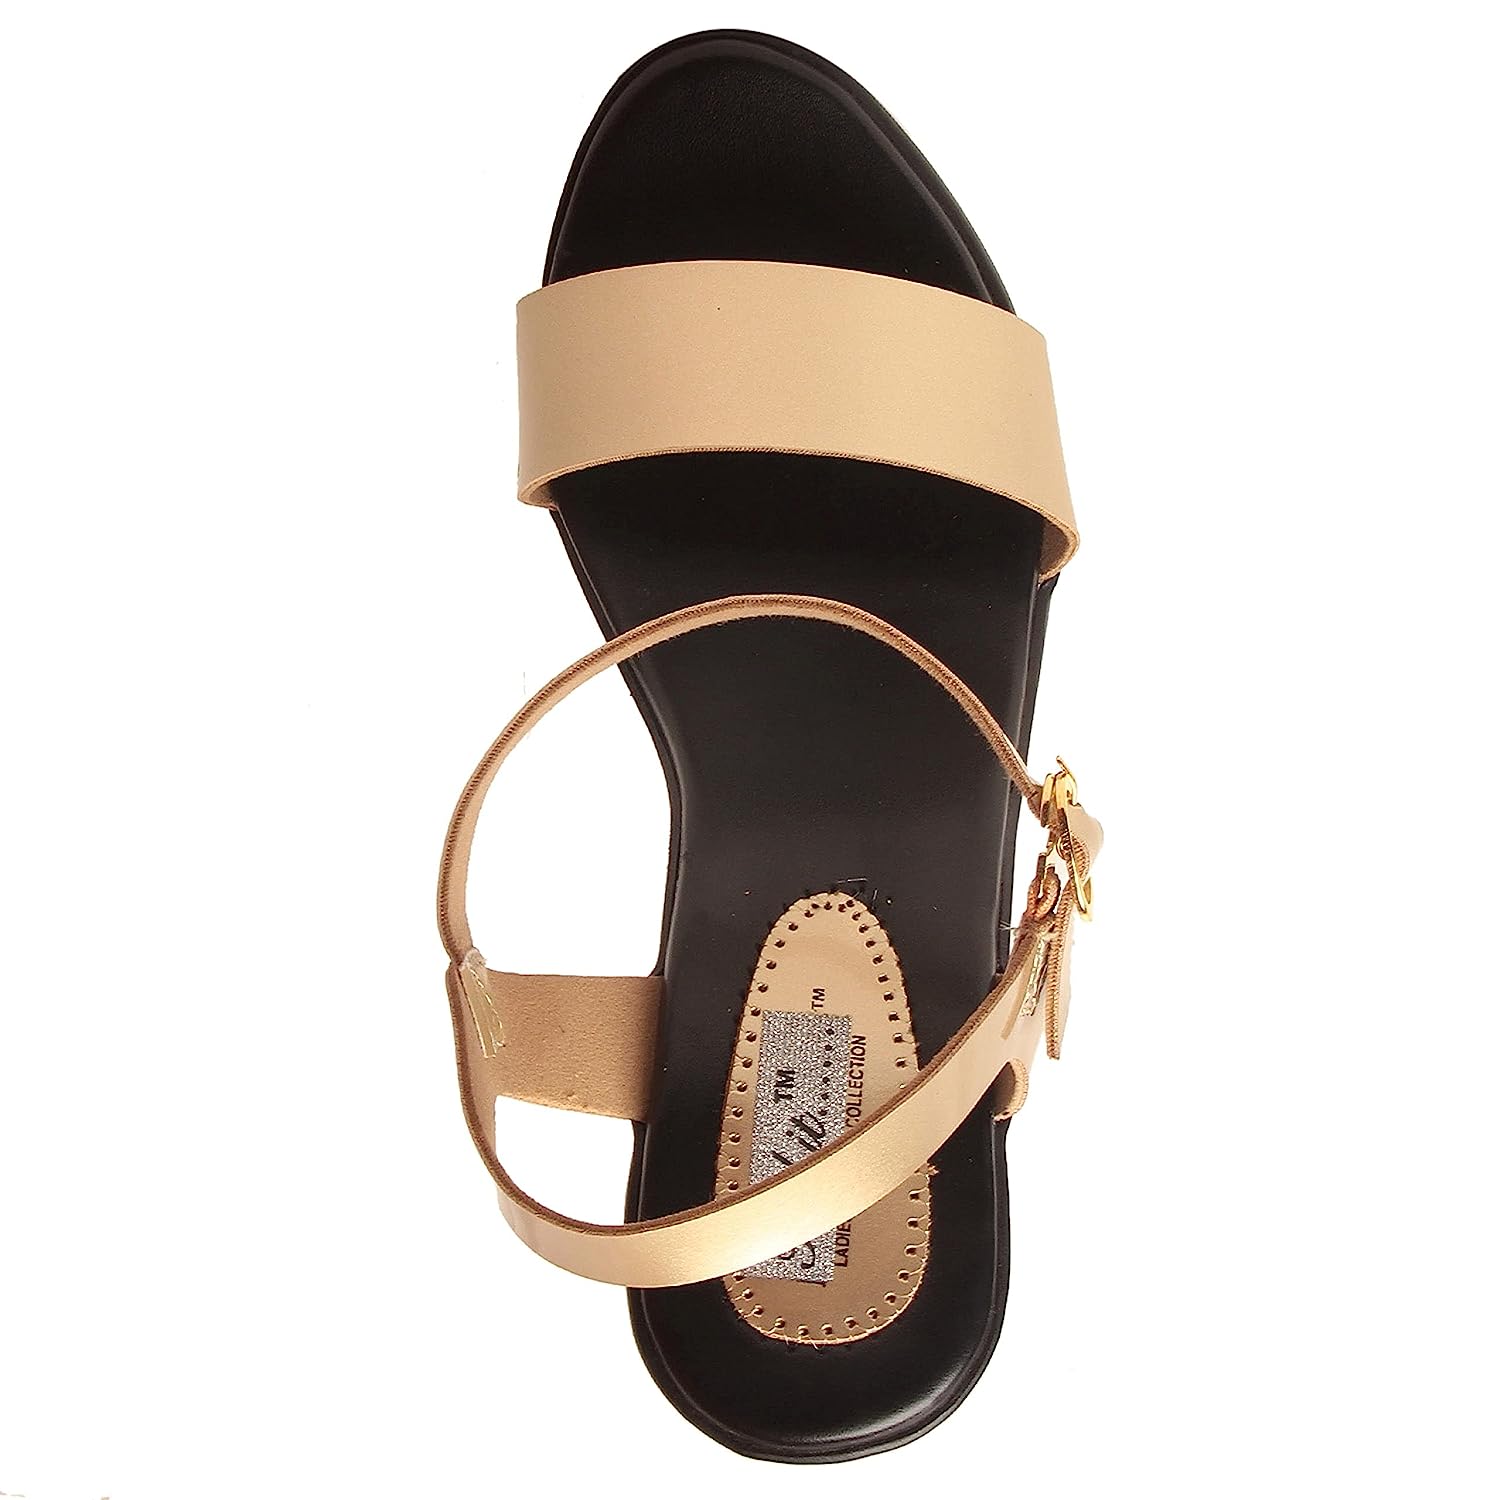 Feel it Women's Fashion Sandal -  fashion sandal in Sri Lanka from Arcade Online Shopping - Just Rs. 5499!